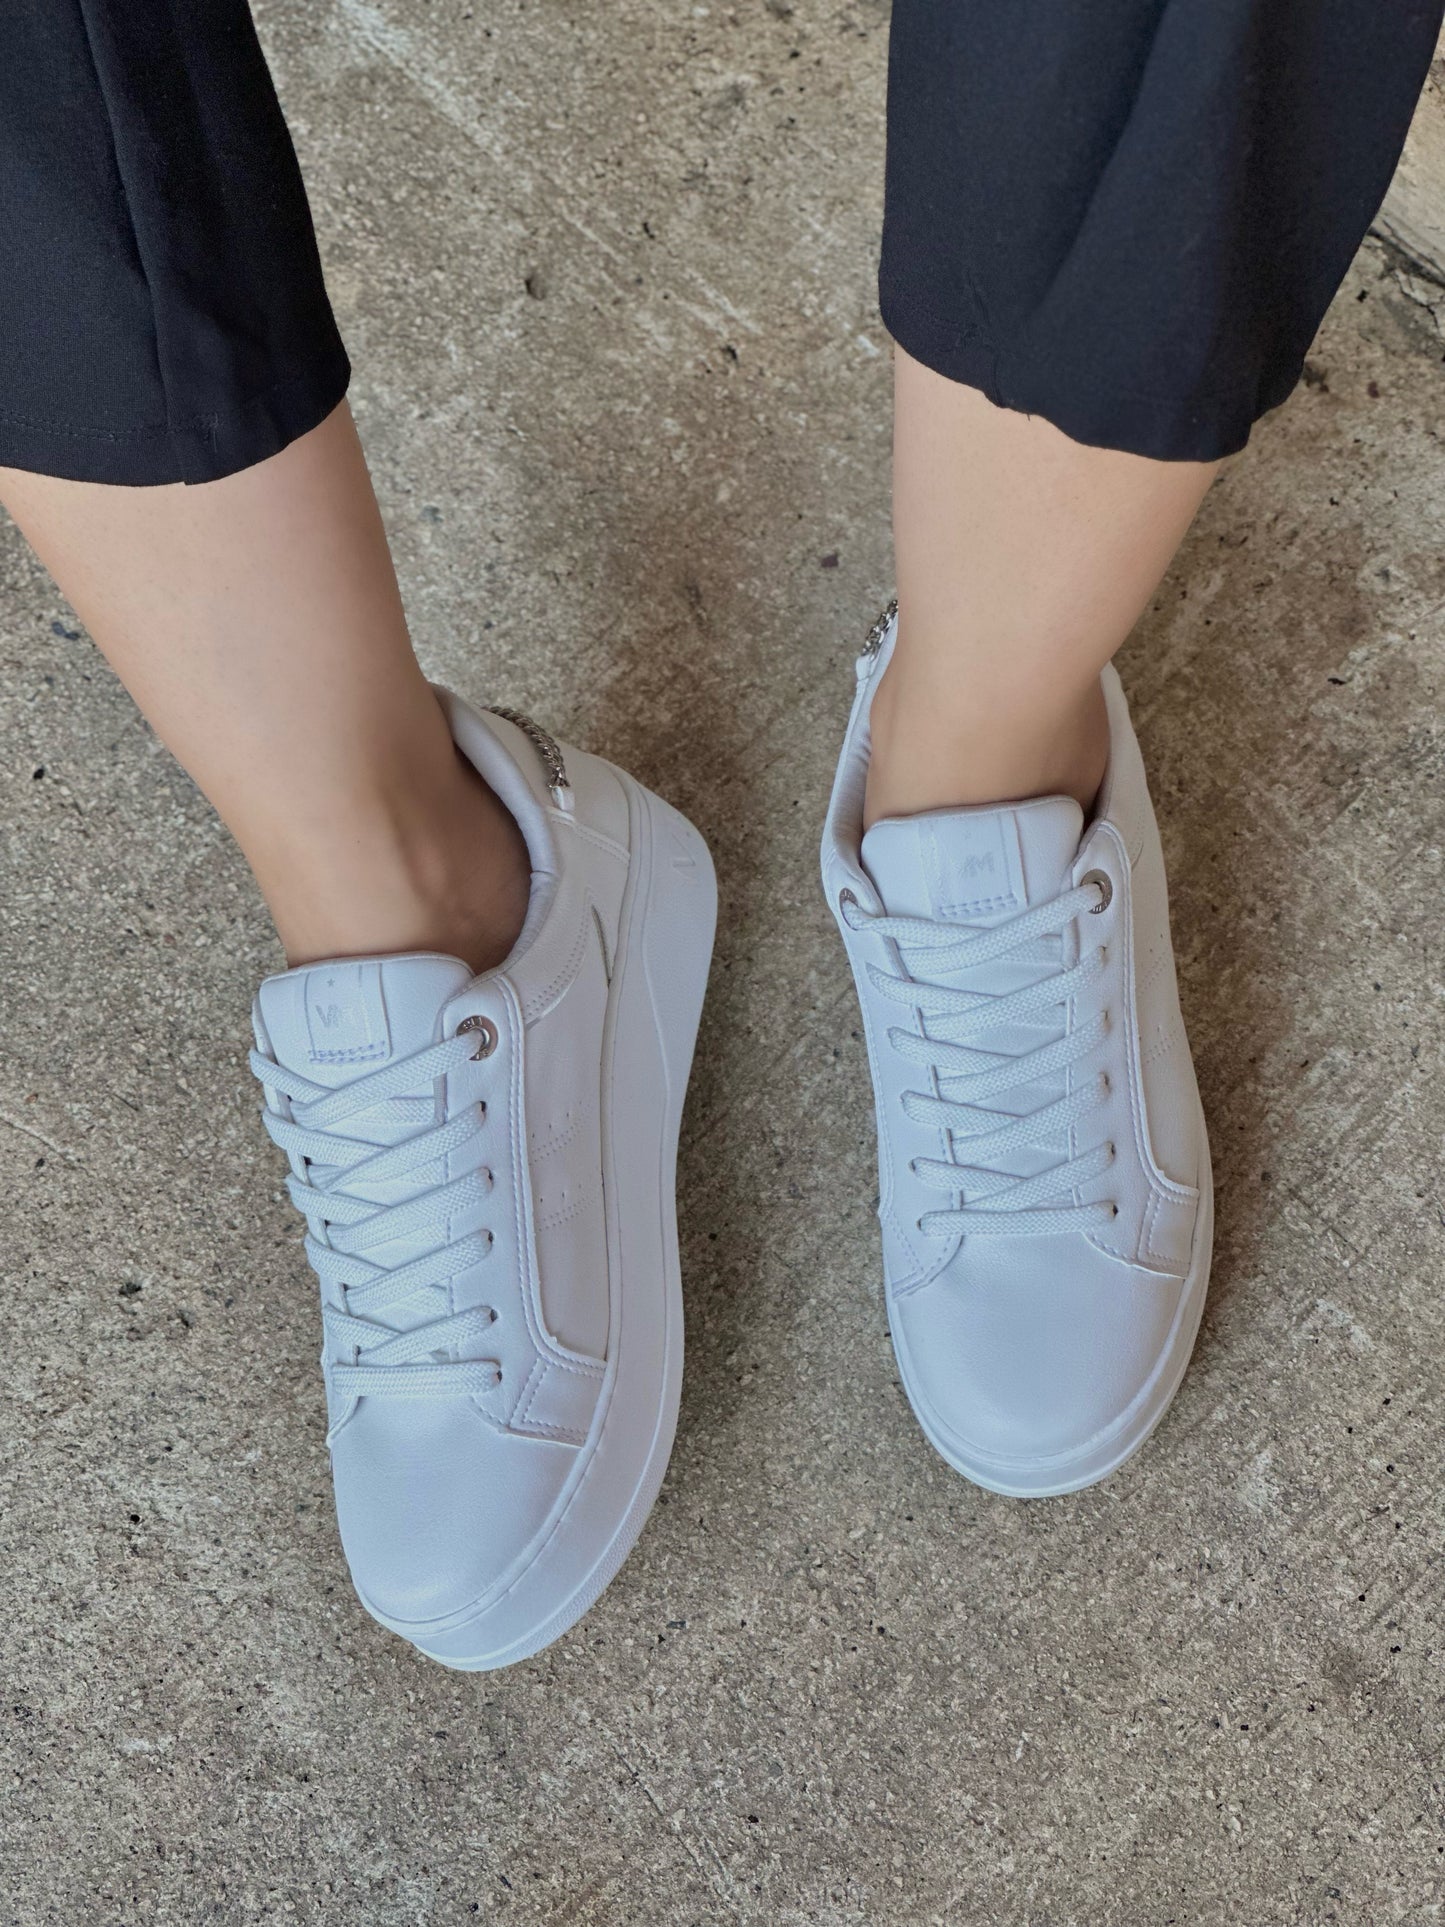 Bera white/silver sneaker 13502-01